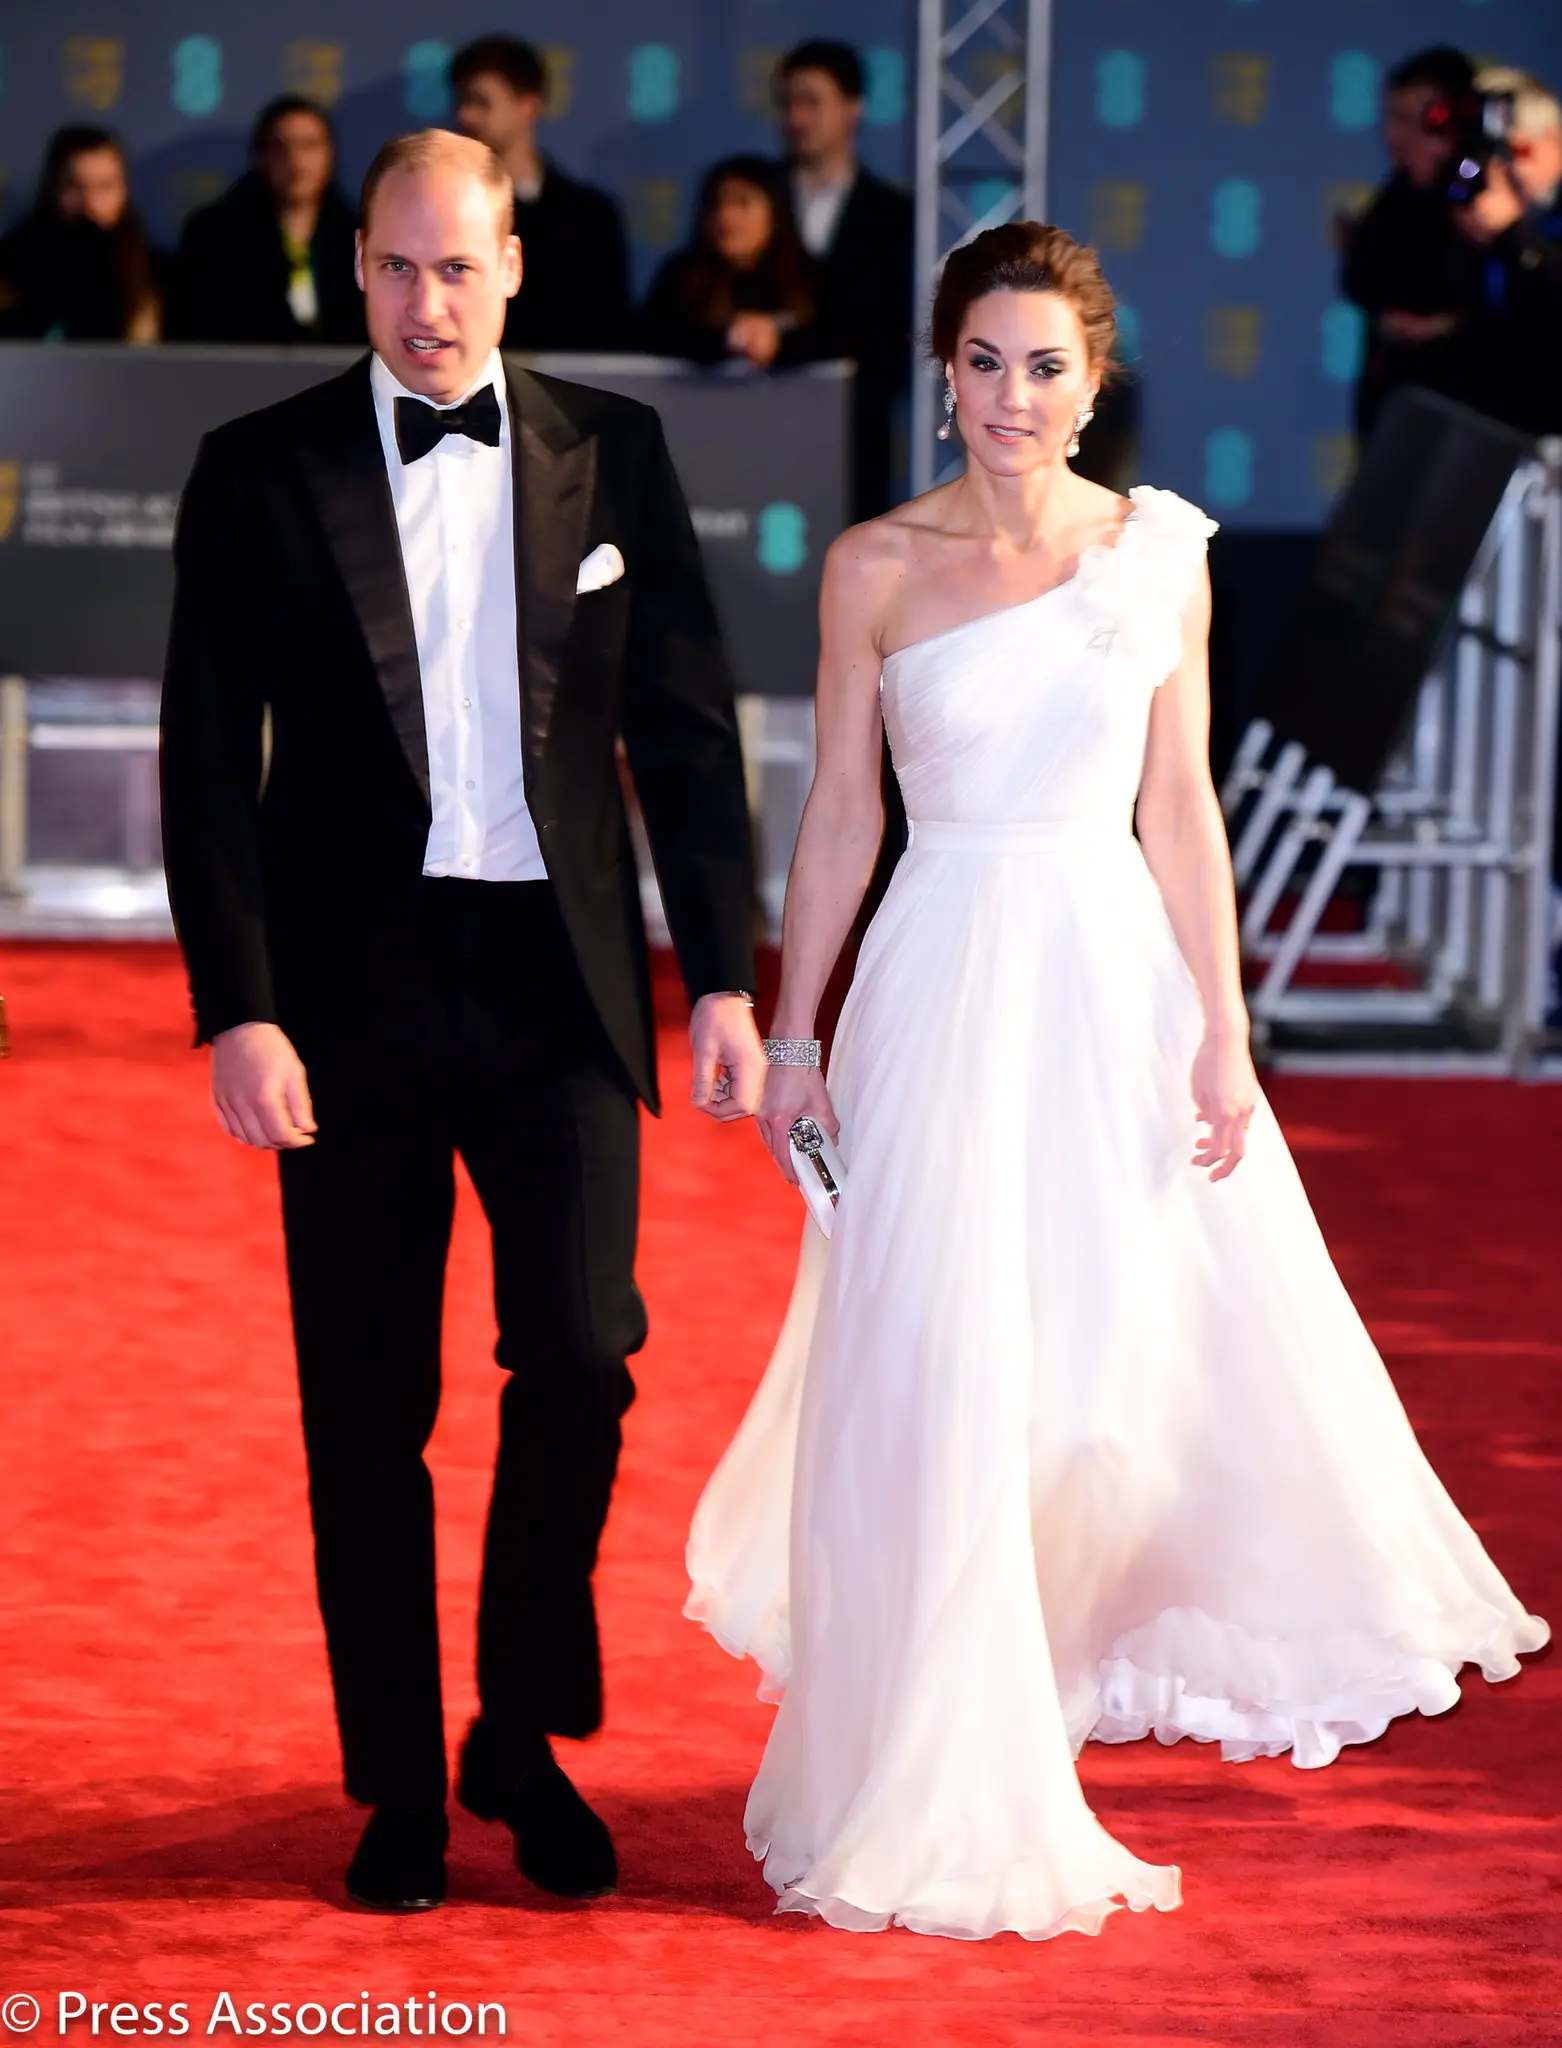 The Duchess of Cambridge wore white off-shoulder Alexander McQueen Gown at BAFTA 2019